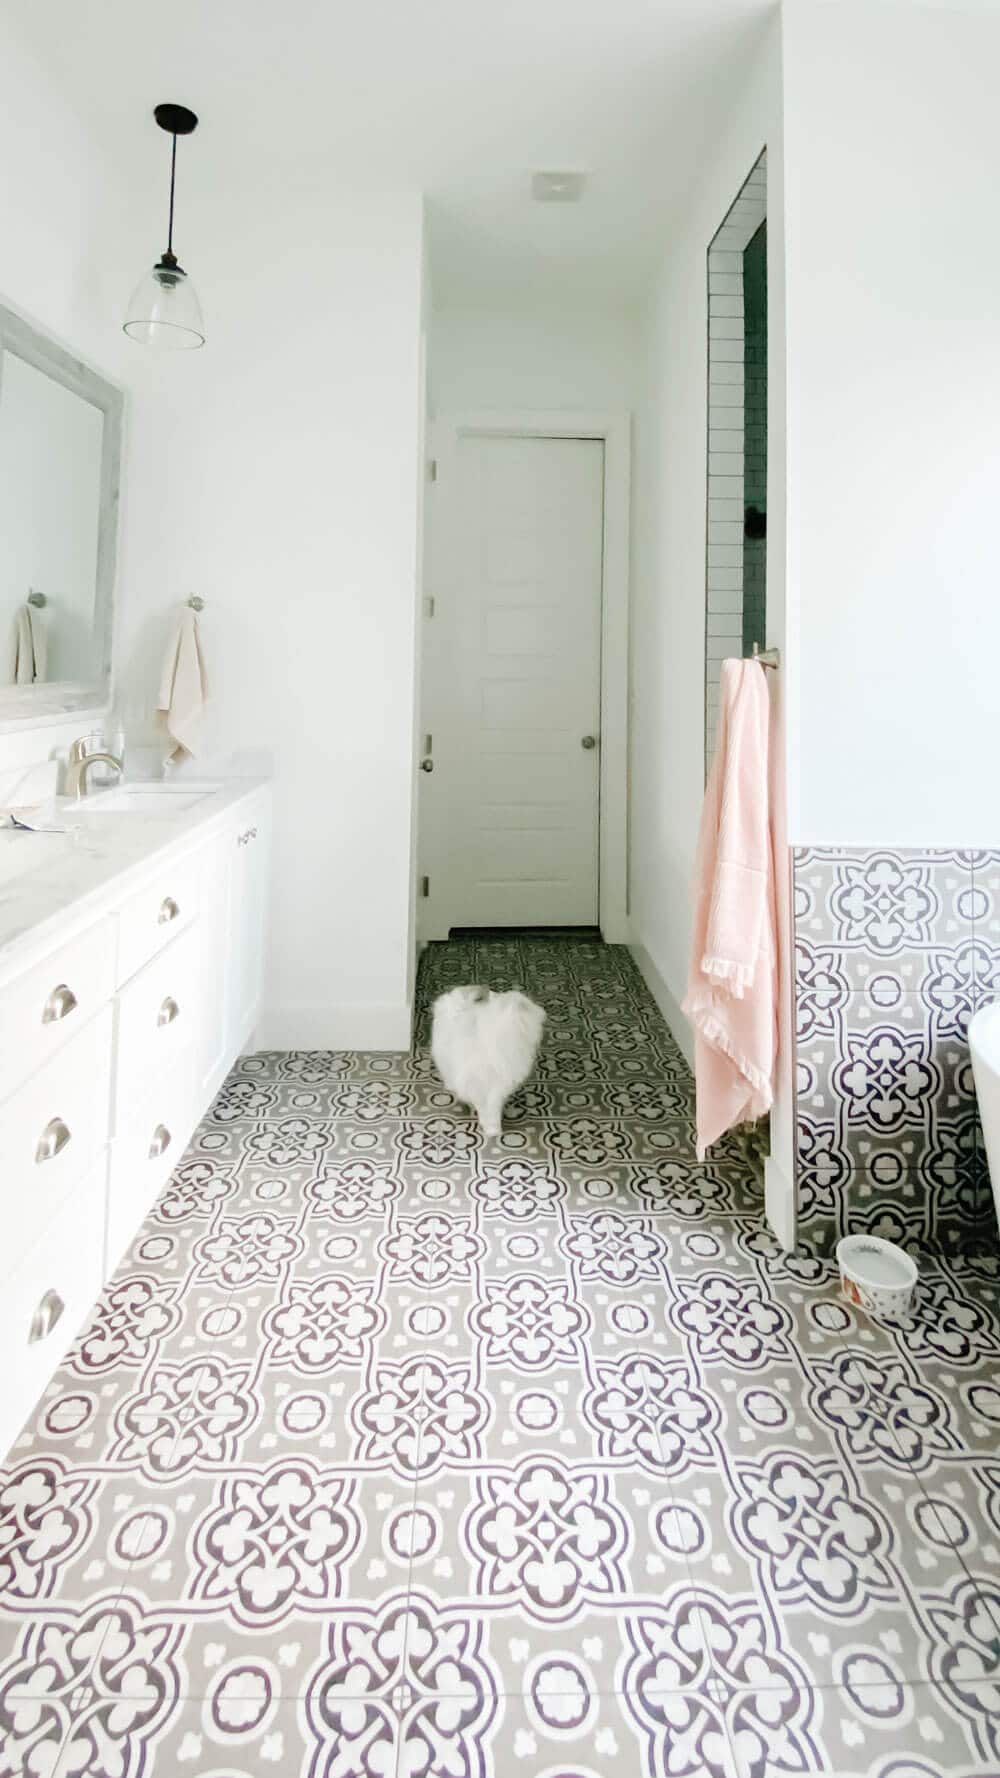 Cottage Inspired Bathroom Renovation Before Photo 1 - Shelley Elizabeth Designs